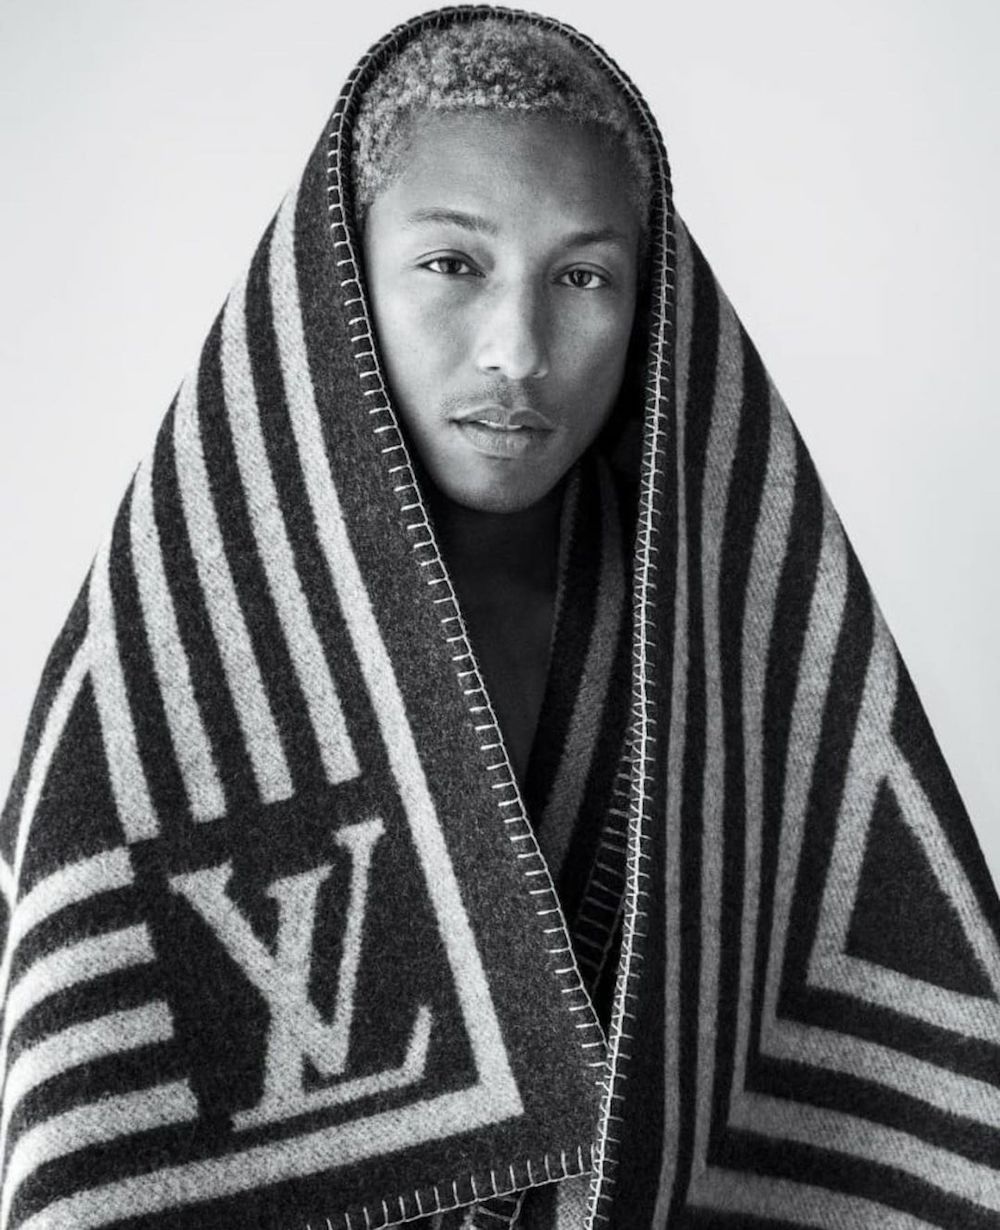 Pharrell Williams "successful" Virgil Abloh at Louis Vuitton